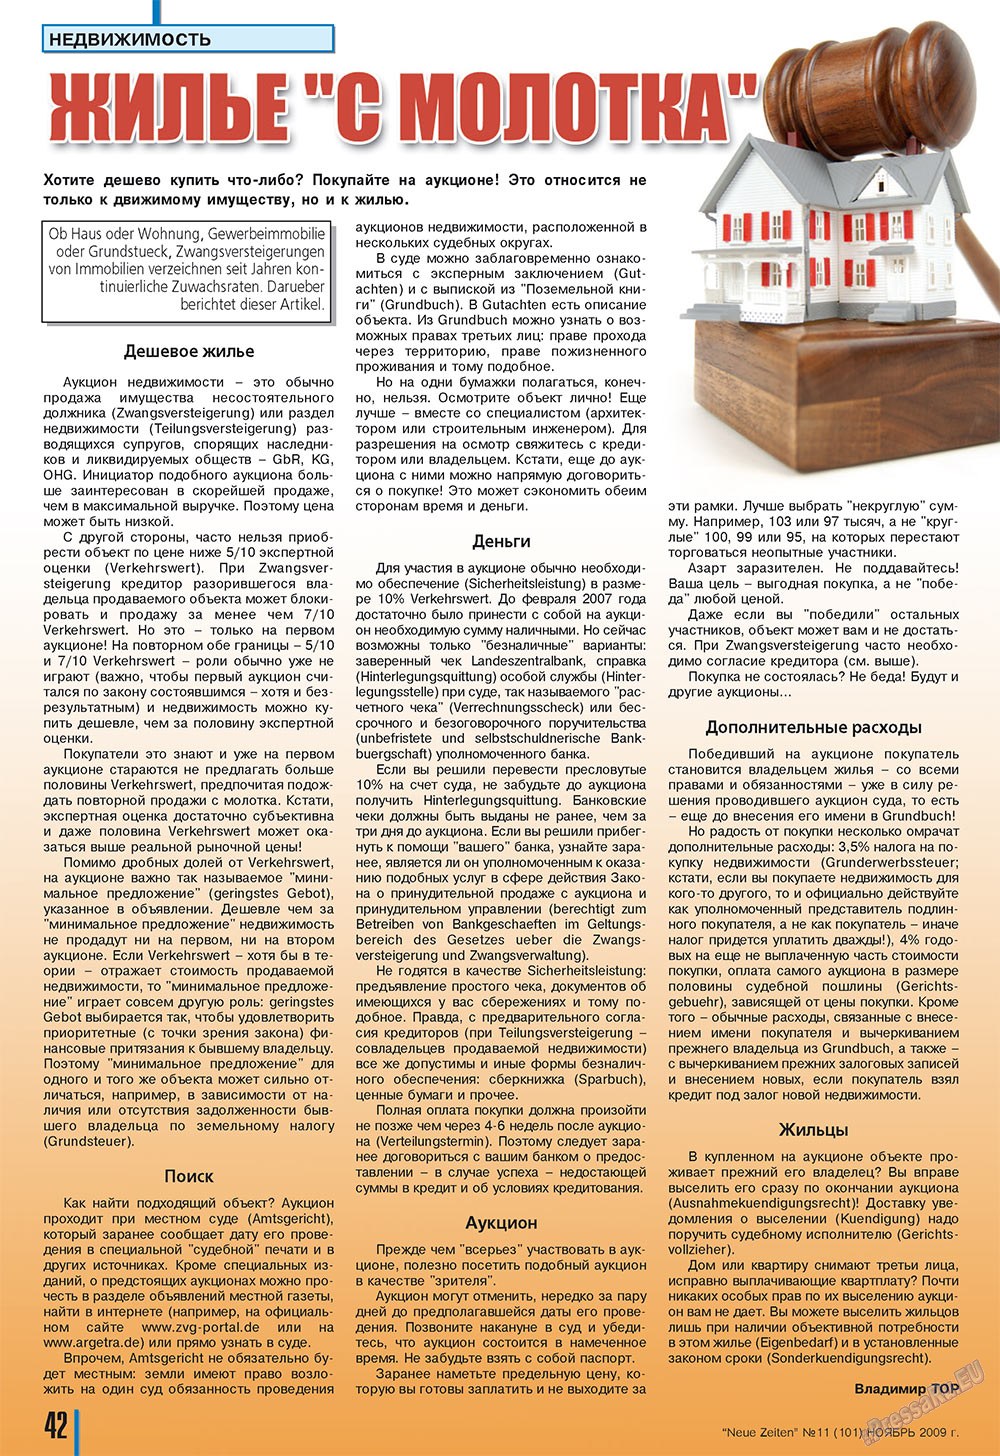 Neue Zeiten (журнал). 2009 год, номер 11, стр. 42